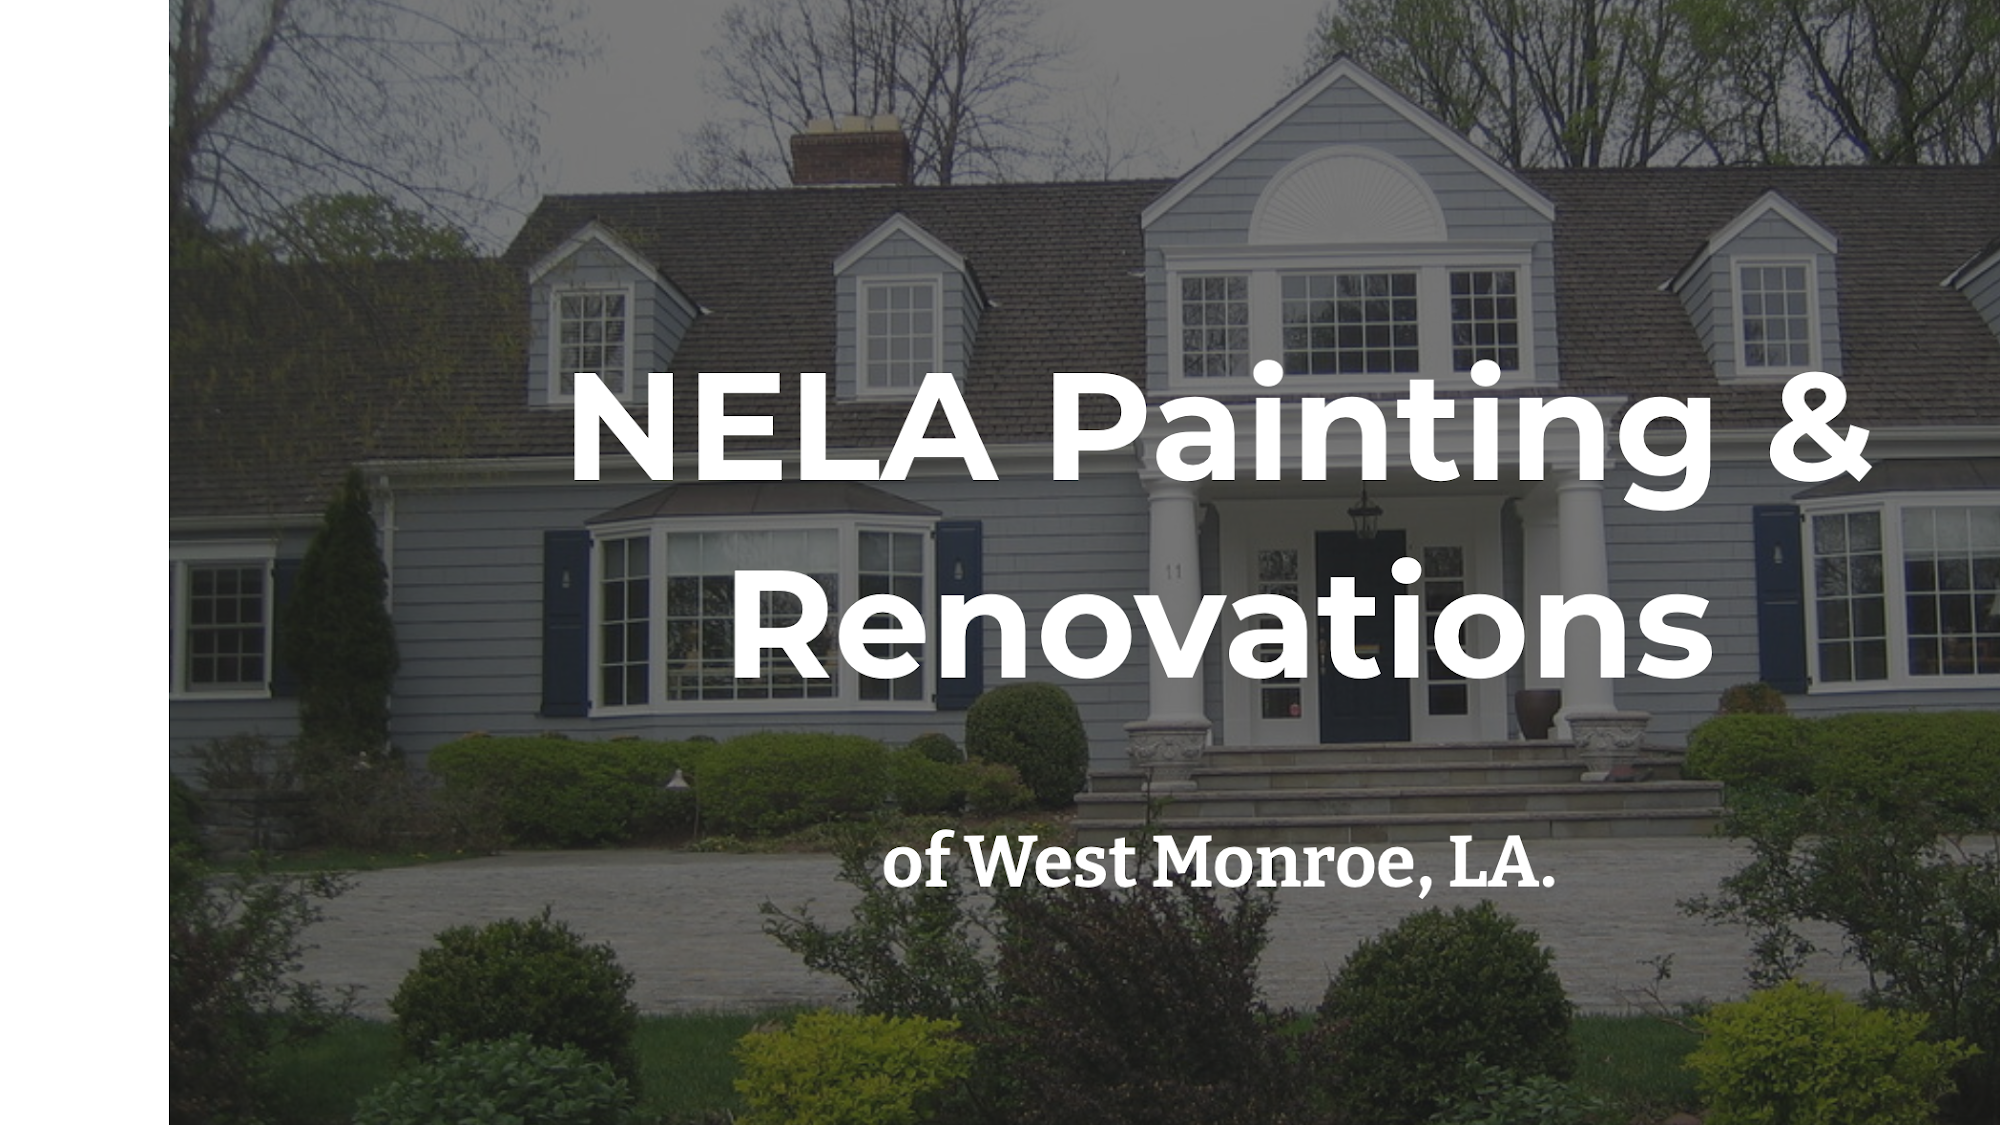 NELA Painting & Renovations of West Monroe